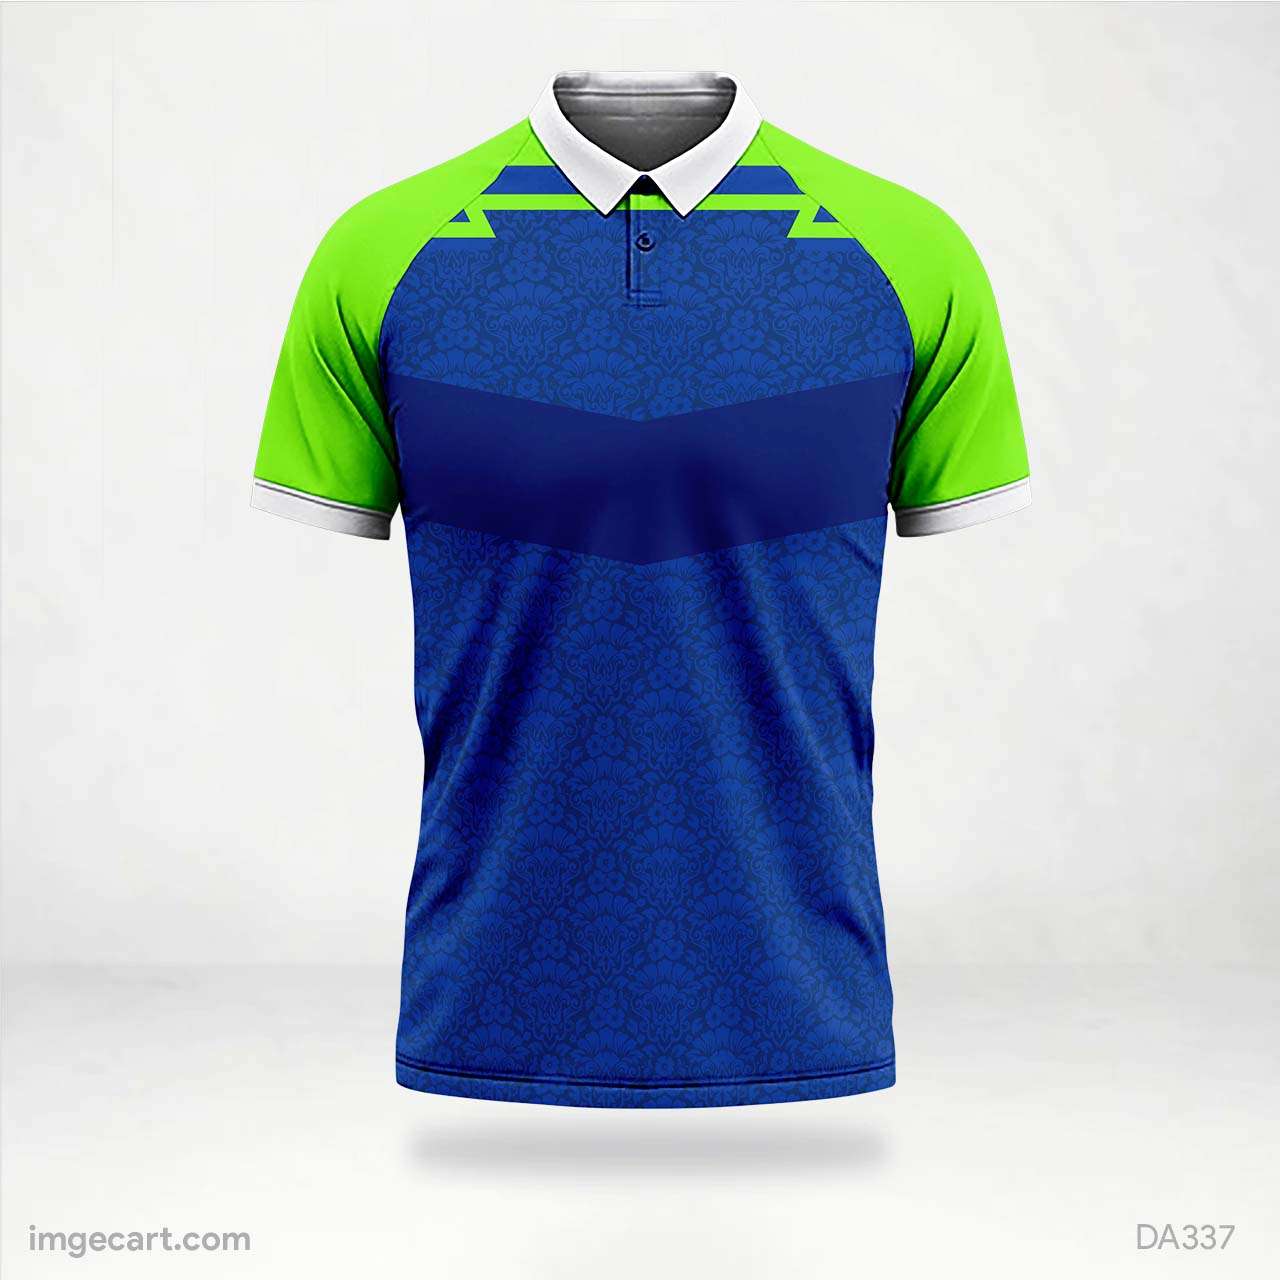 Cricket jersey design blue with Neon - imgecart